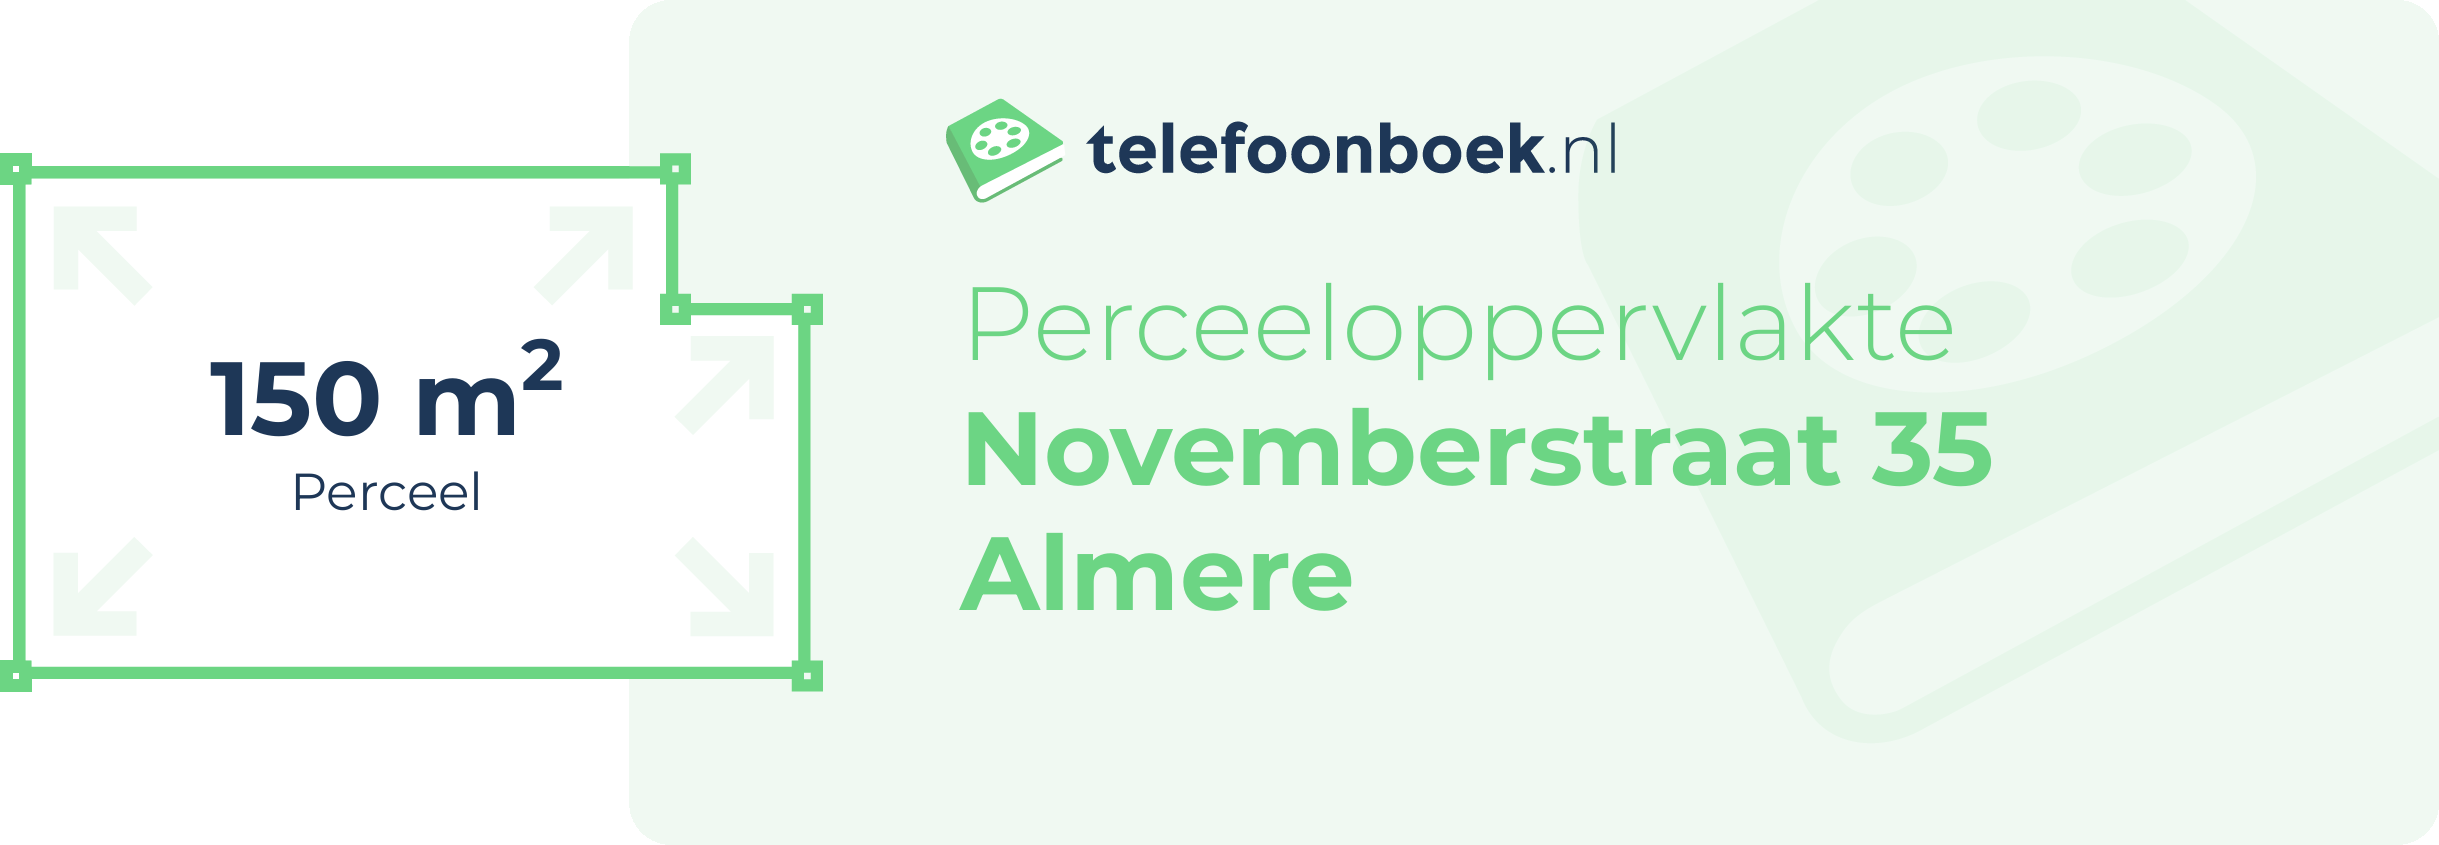 Perceeloppervlakte Novemberstraat 35 Almere